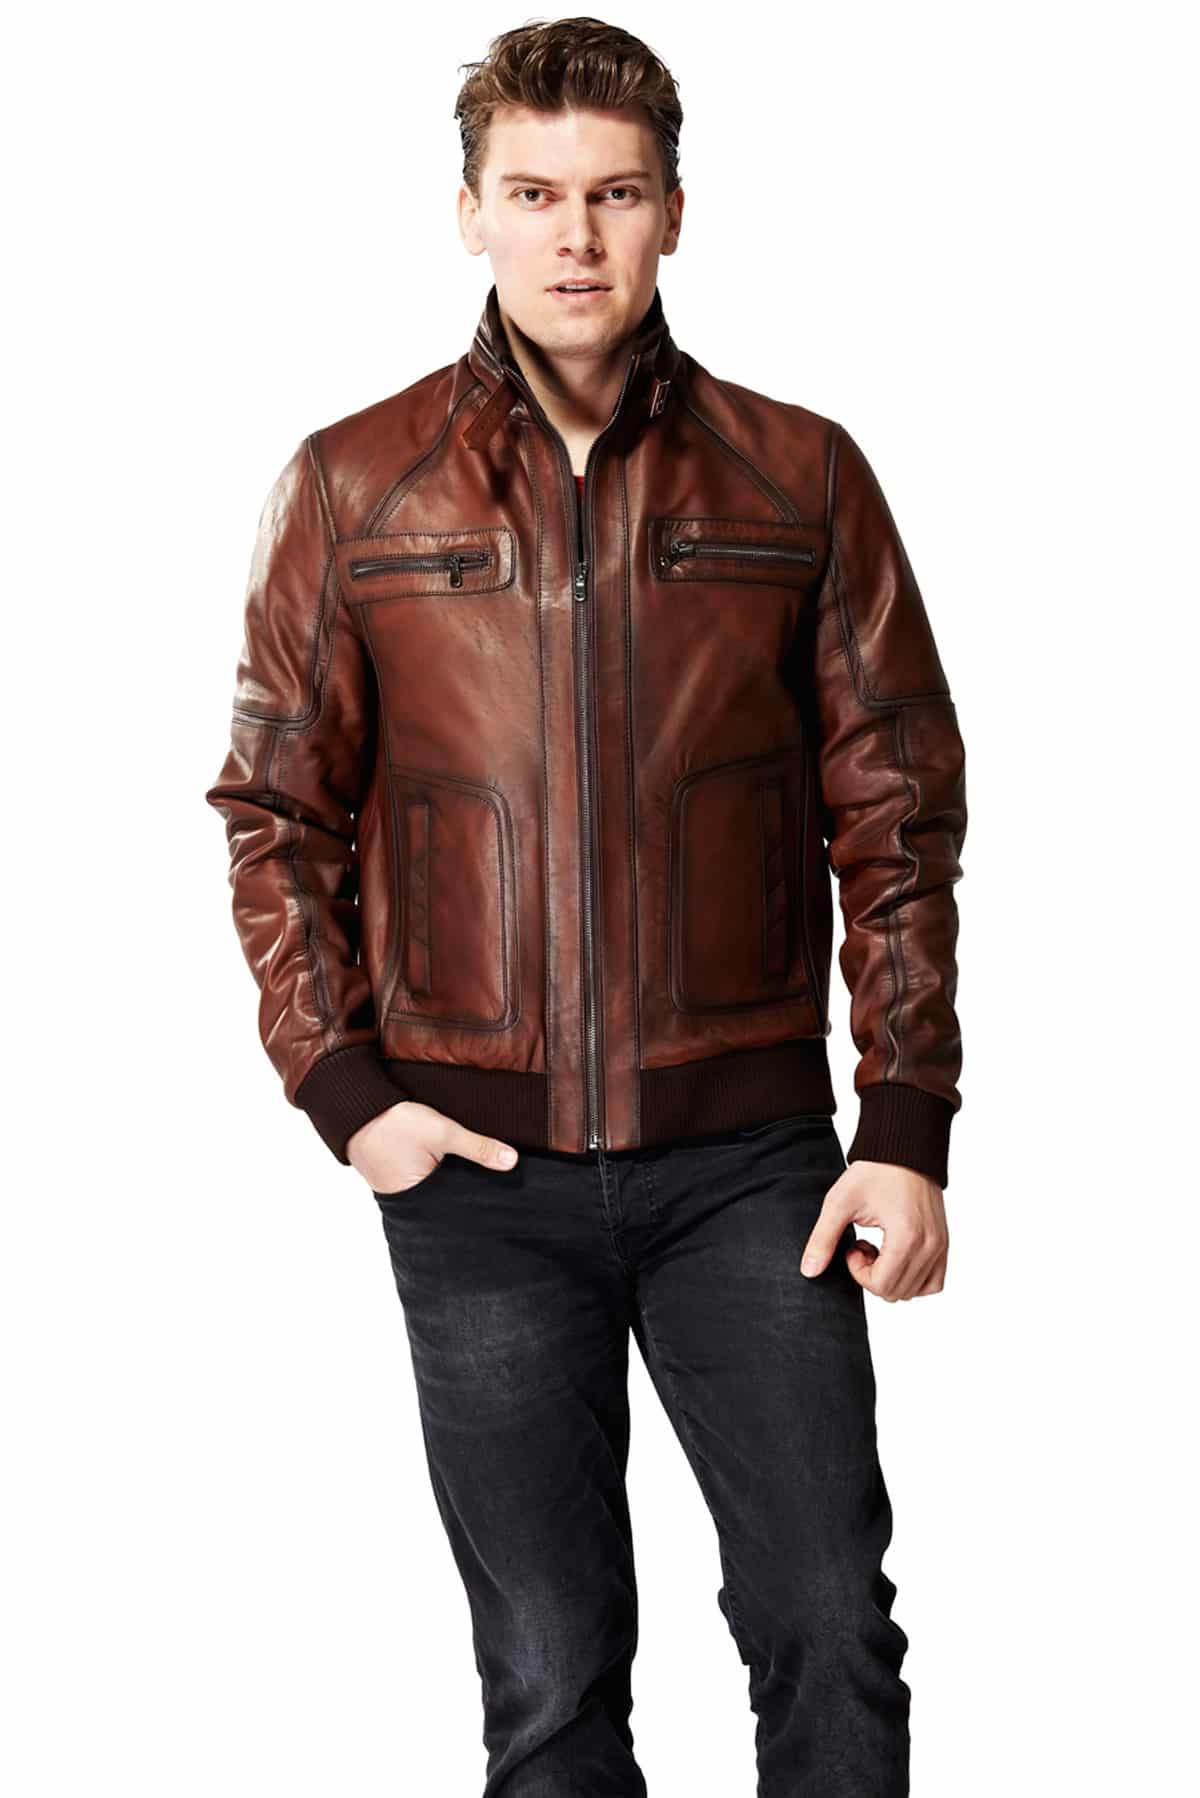 10 Leather Jacket Outfit Ideas For Men To Try This Season | Combinacion de  ropa hombre, Combinar ropa de hombre, Estilo de ropa hombre